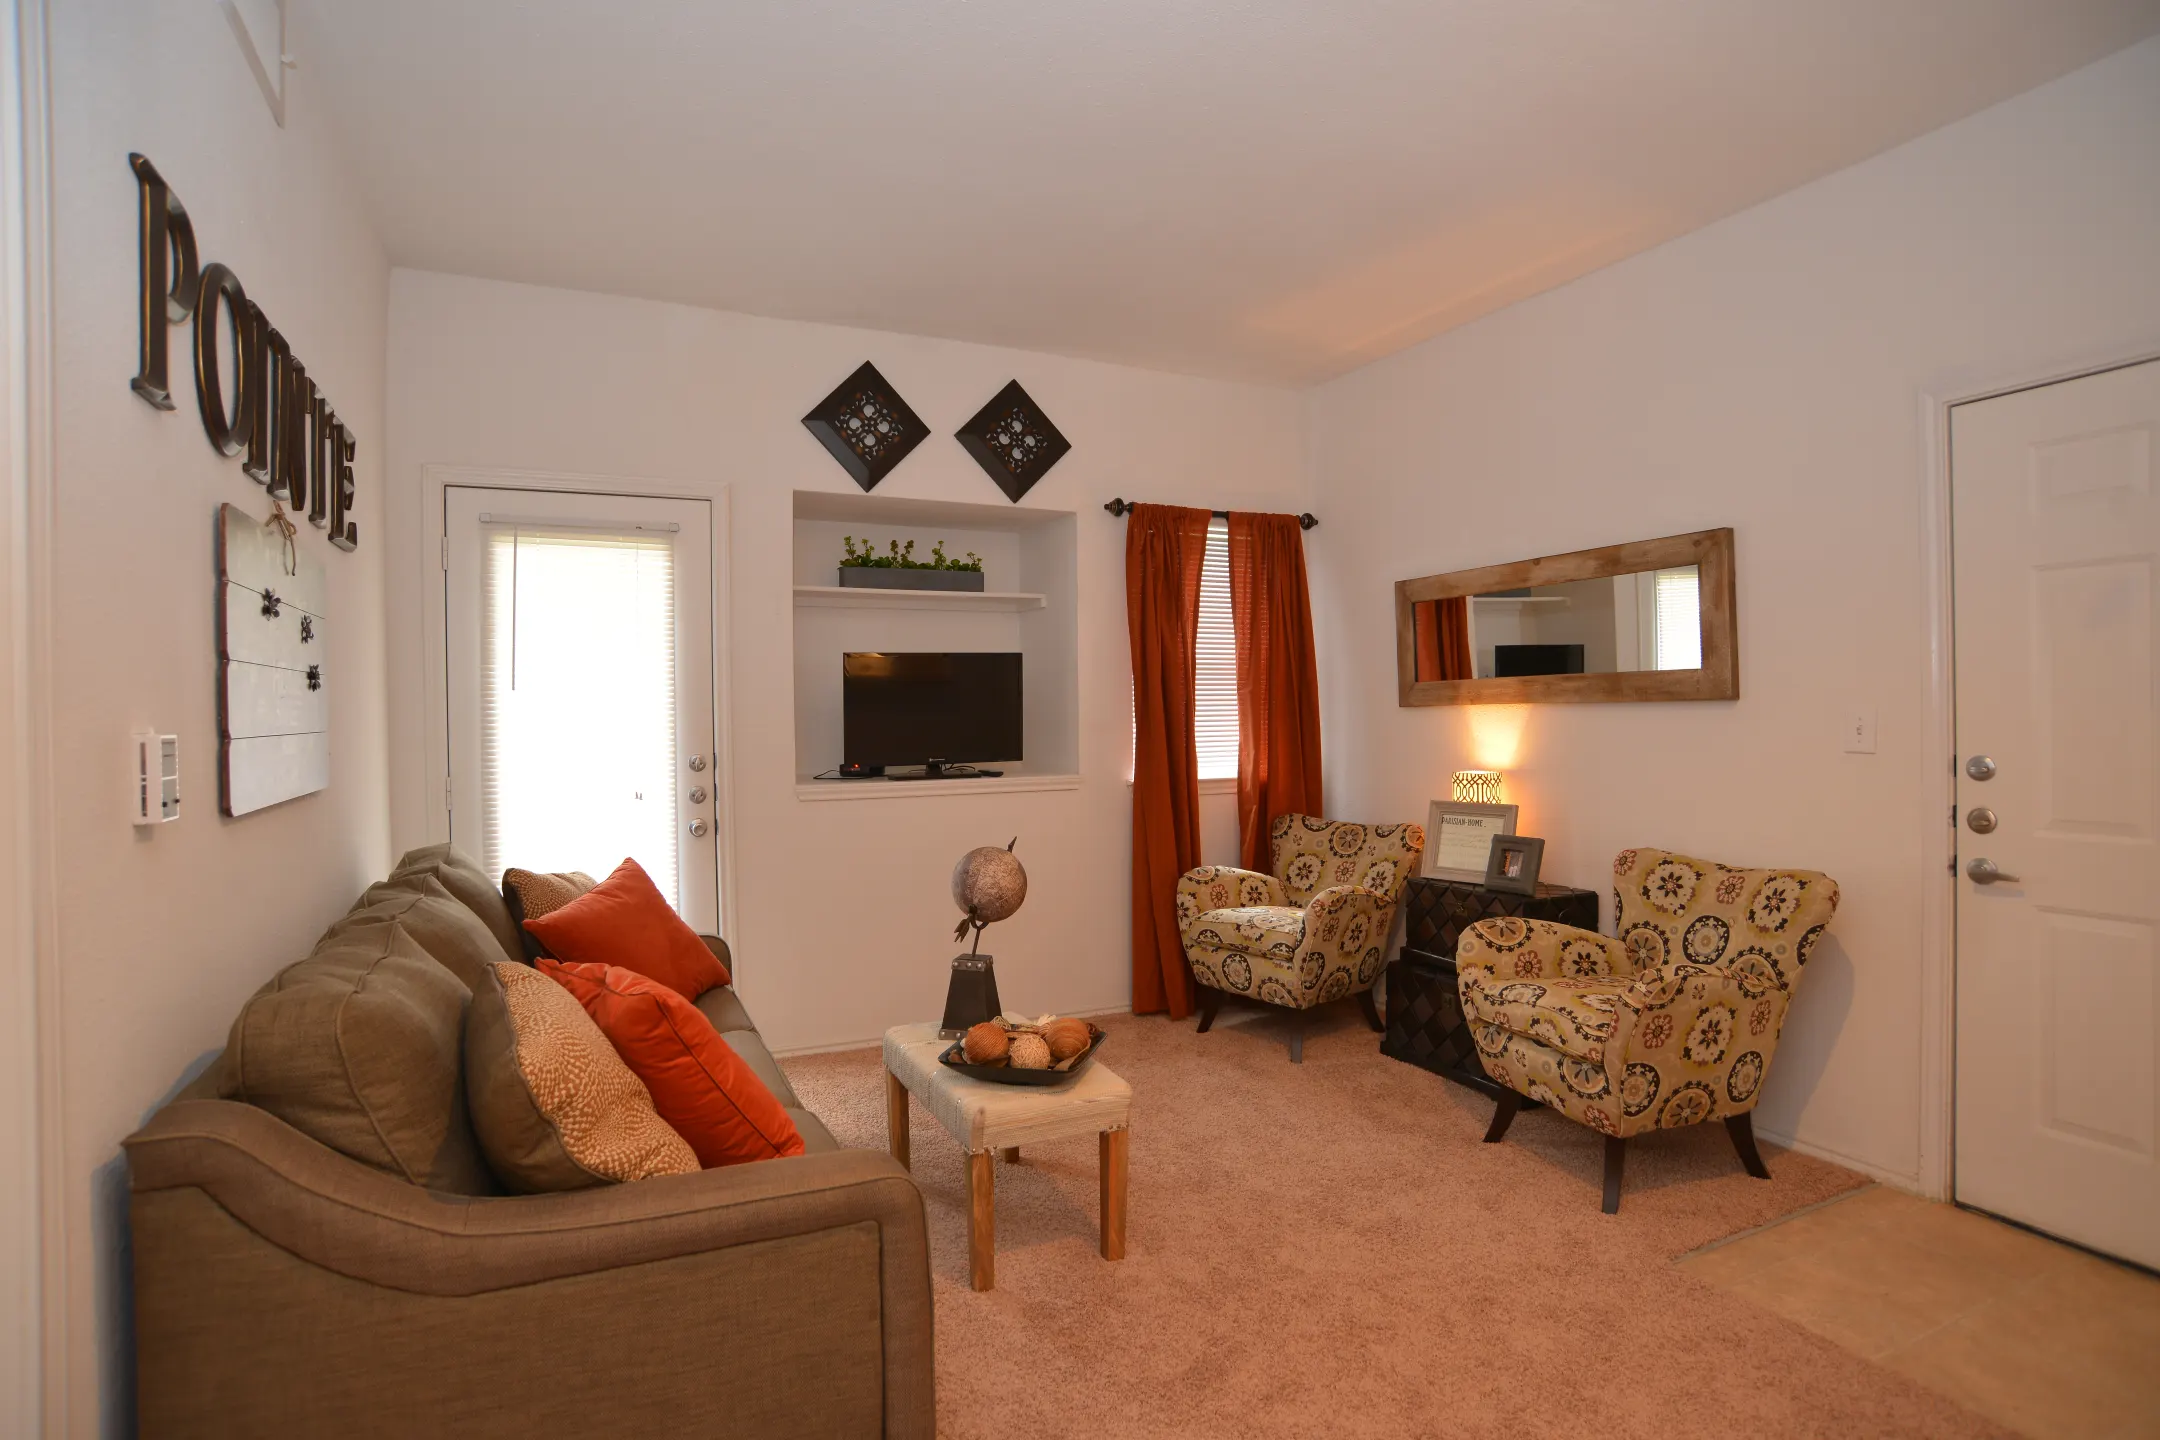 Living Room - The Pointe of Ridgeland - Ridgeland, MS